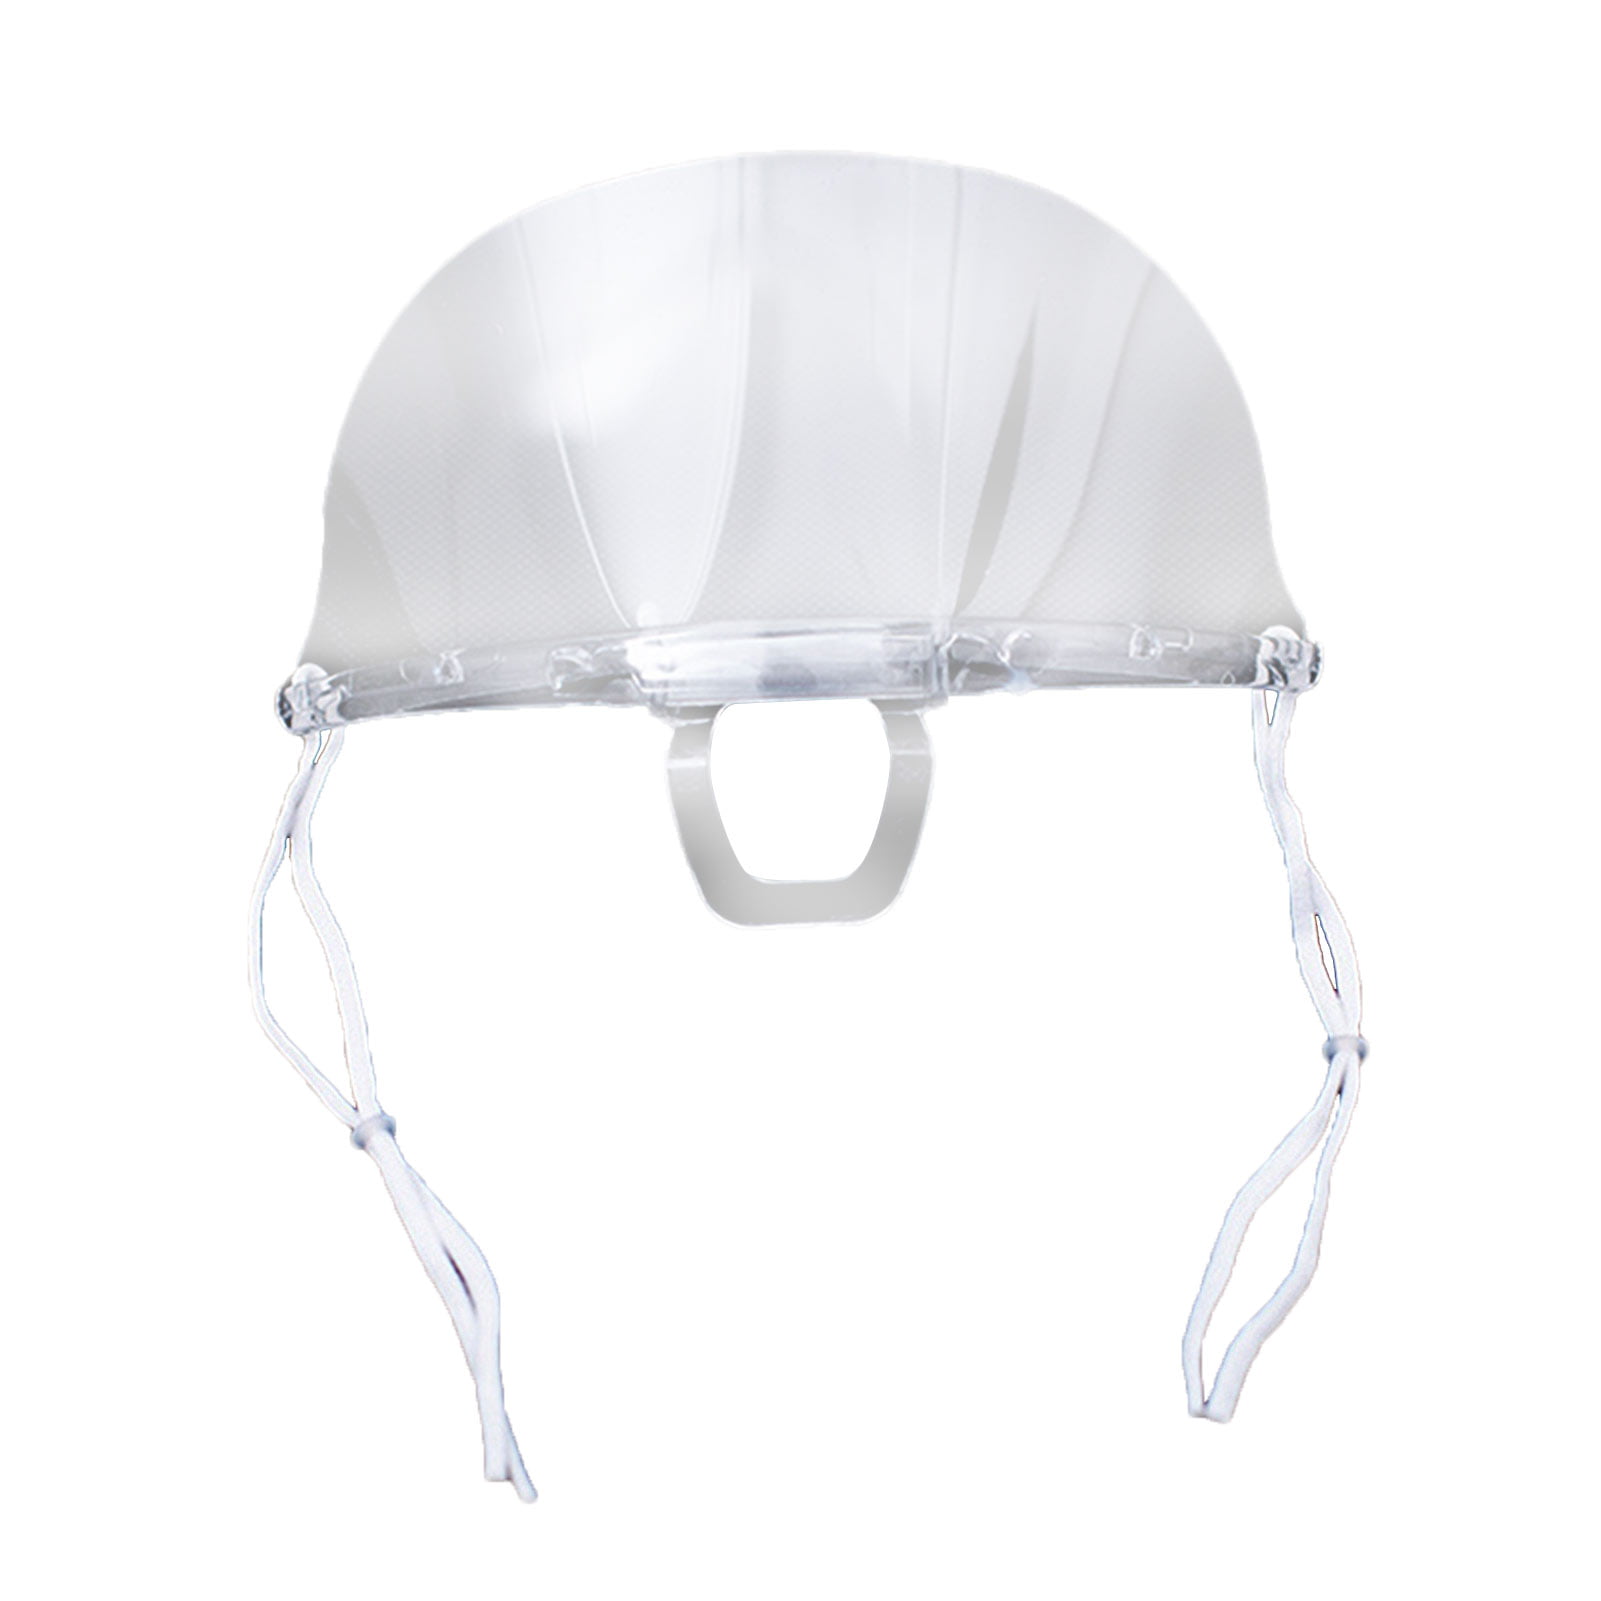 Details about   10pcs Splash Face Saliva-proof Anti-fog Cap Full Face Protective Shield Sun Hat 